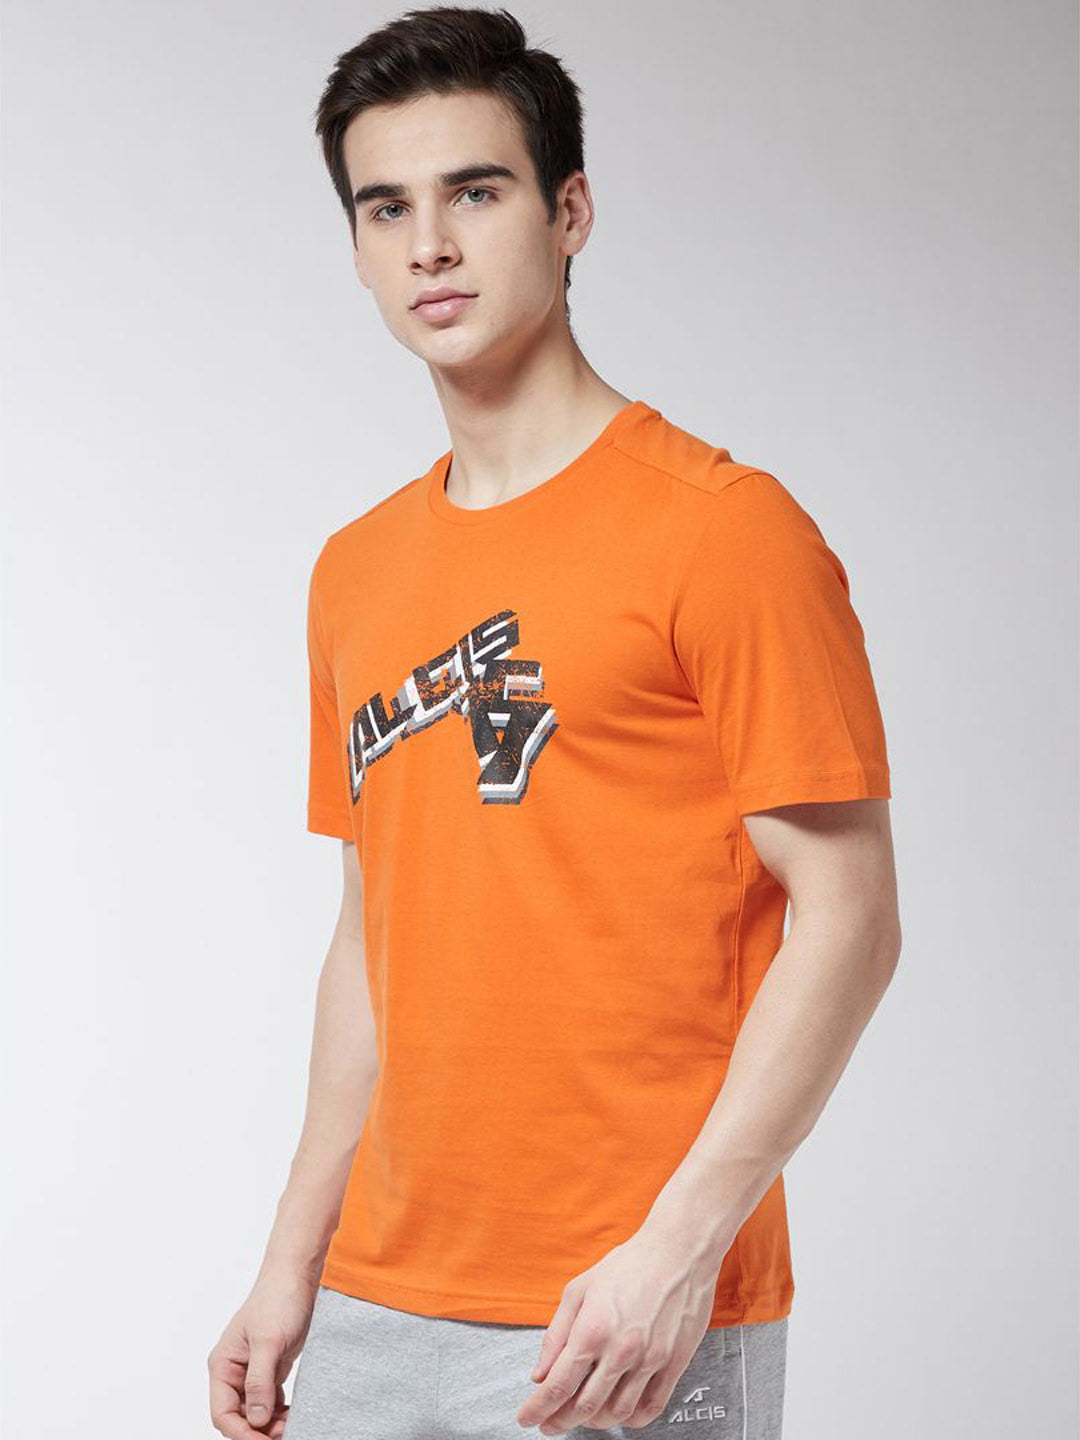 Alcis Men Orange Printed Round Neck Training T-shirt